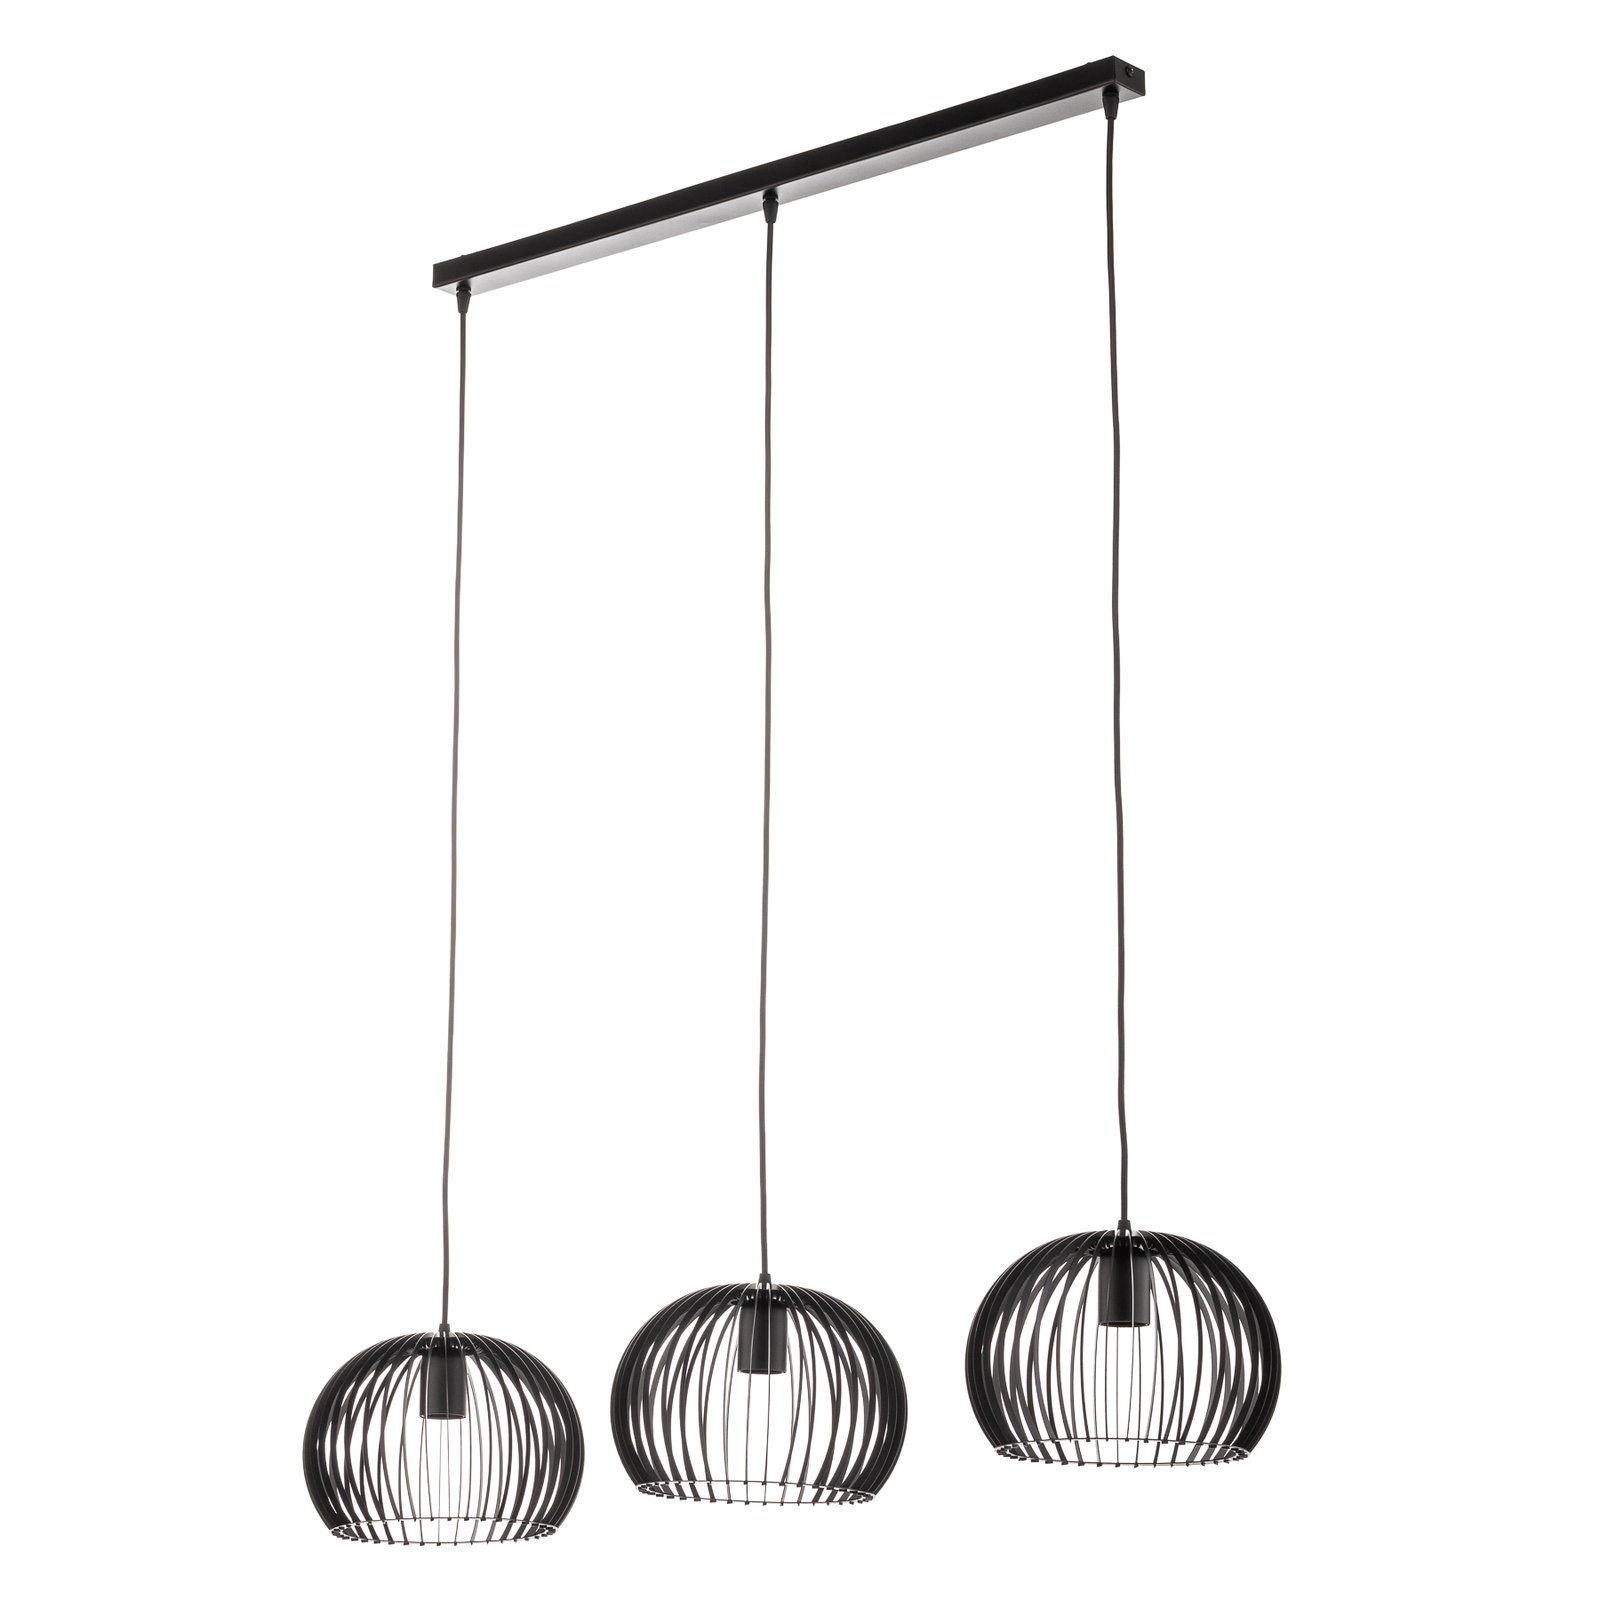 Larus pendant lamp in black steel, three-bulb